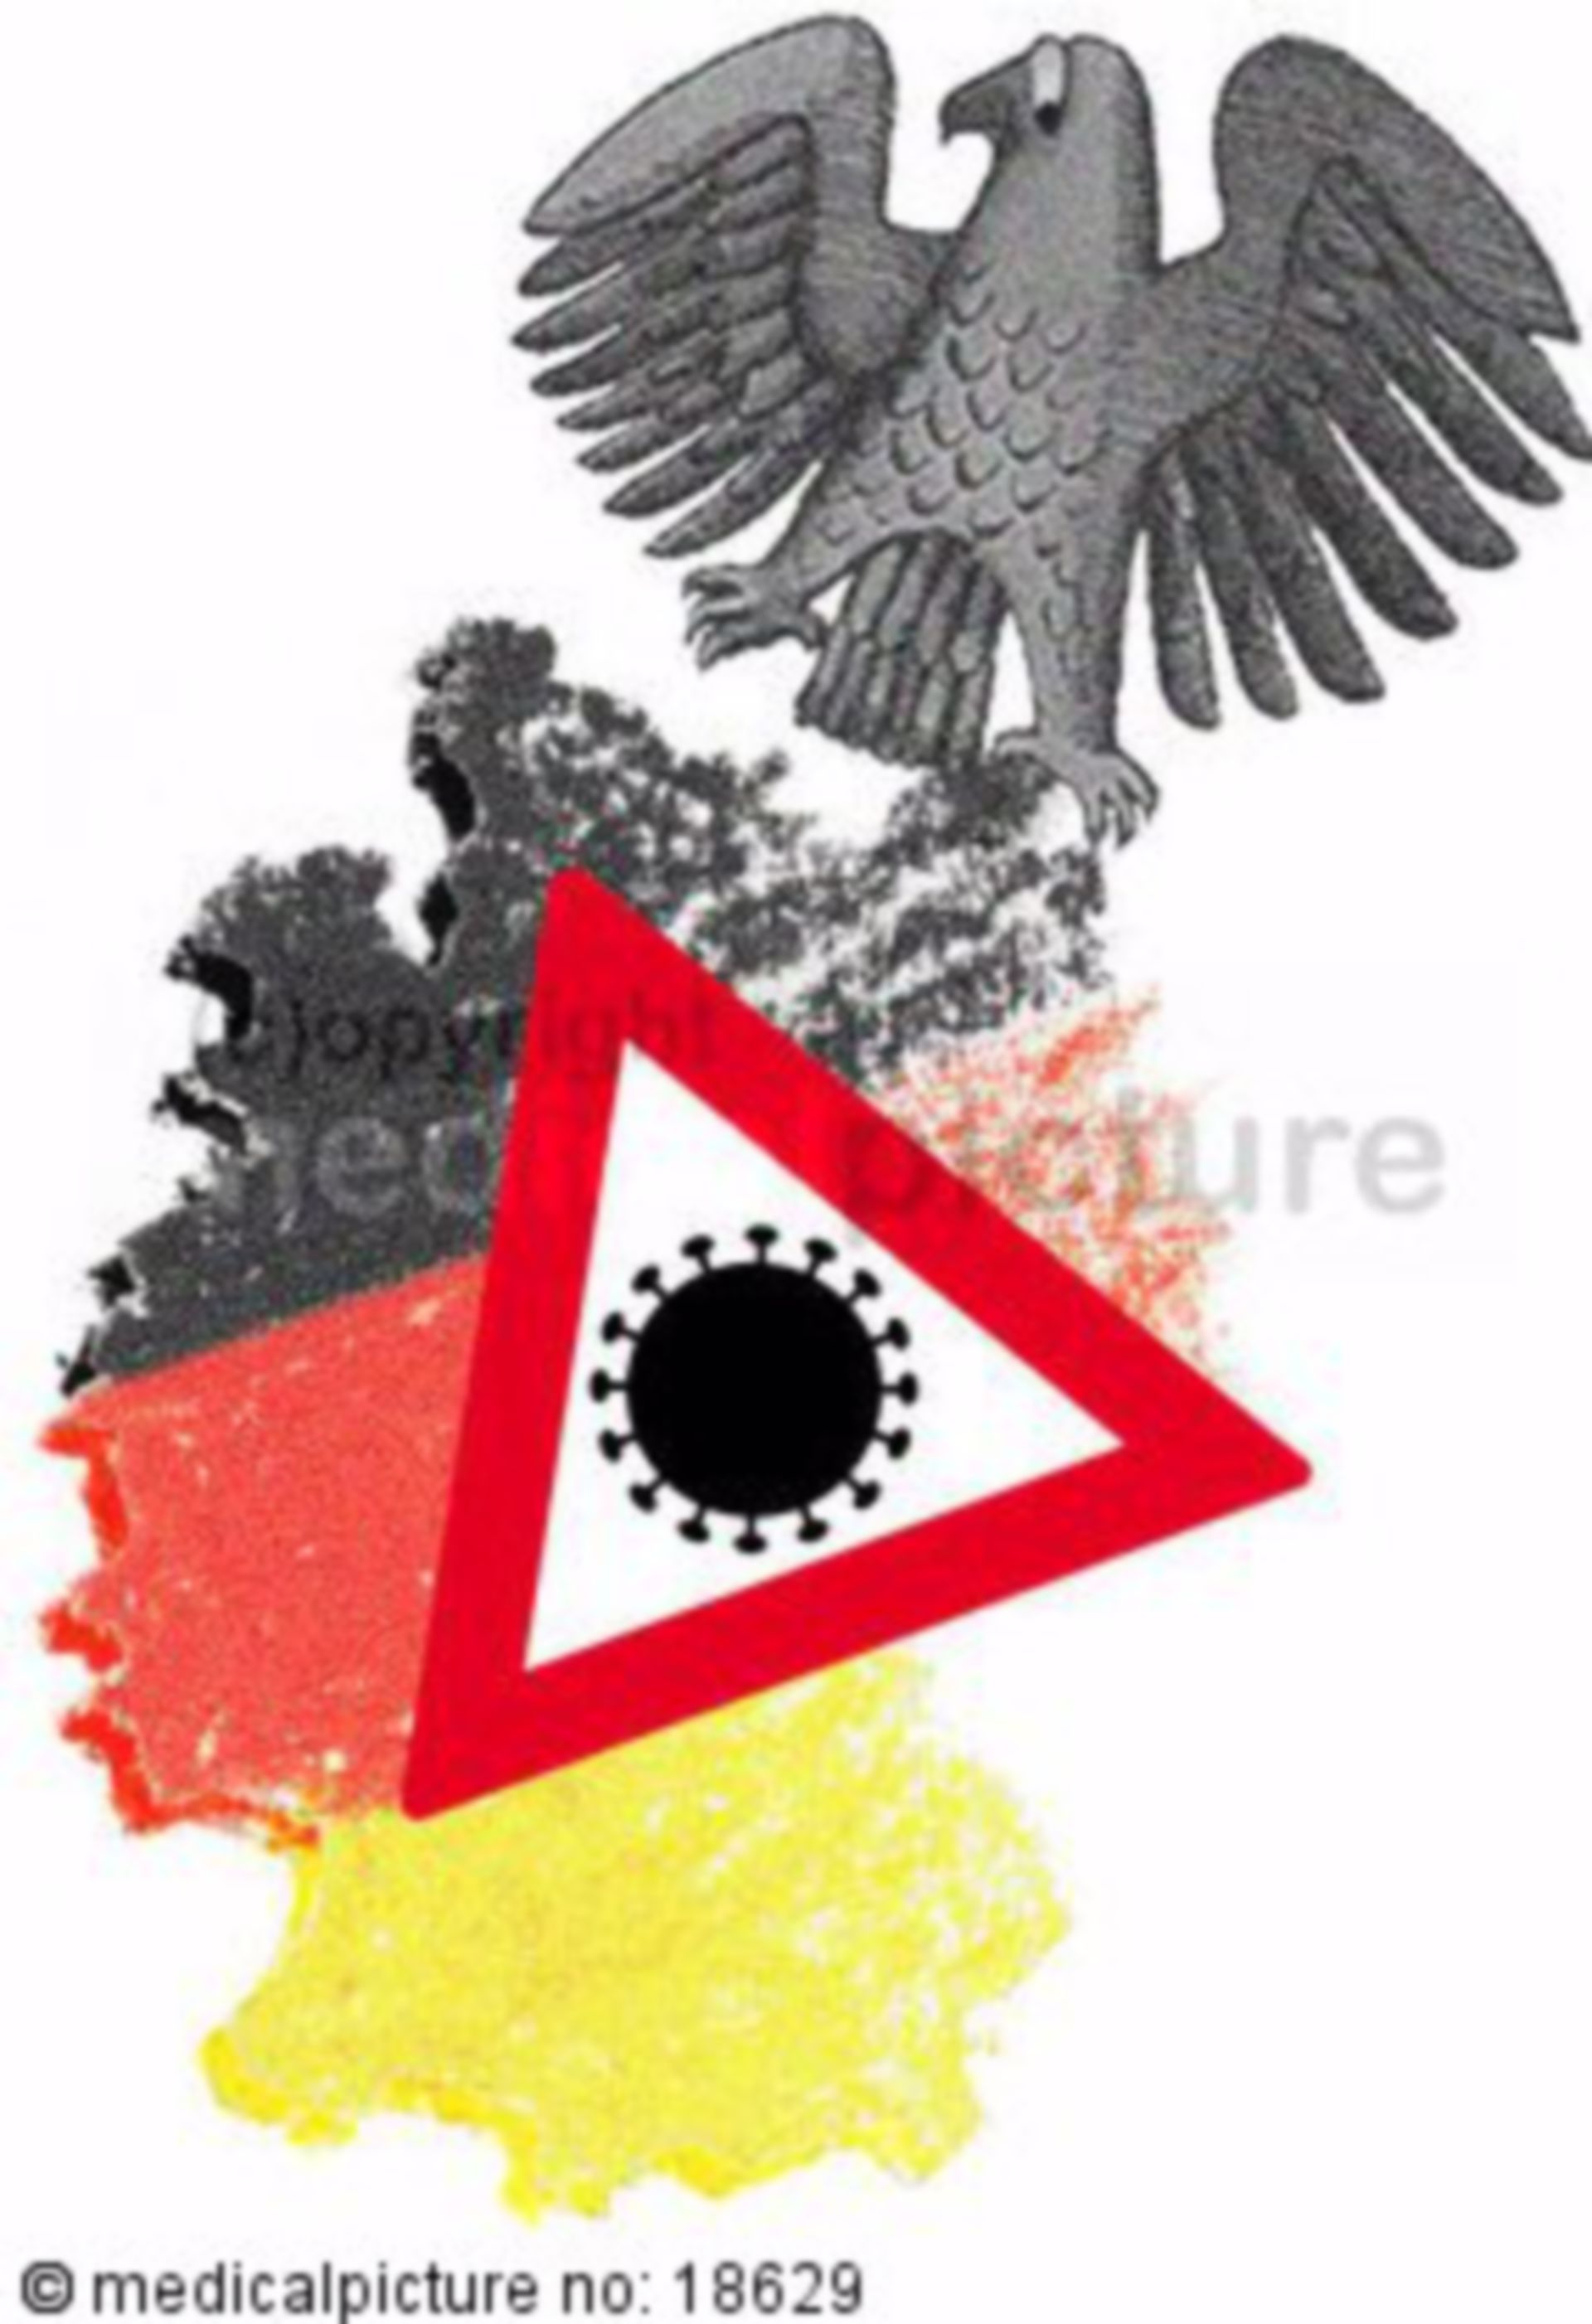  H5N1 Virus bedroht Deutschland, avian flu in Germany 
